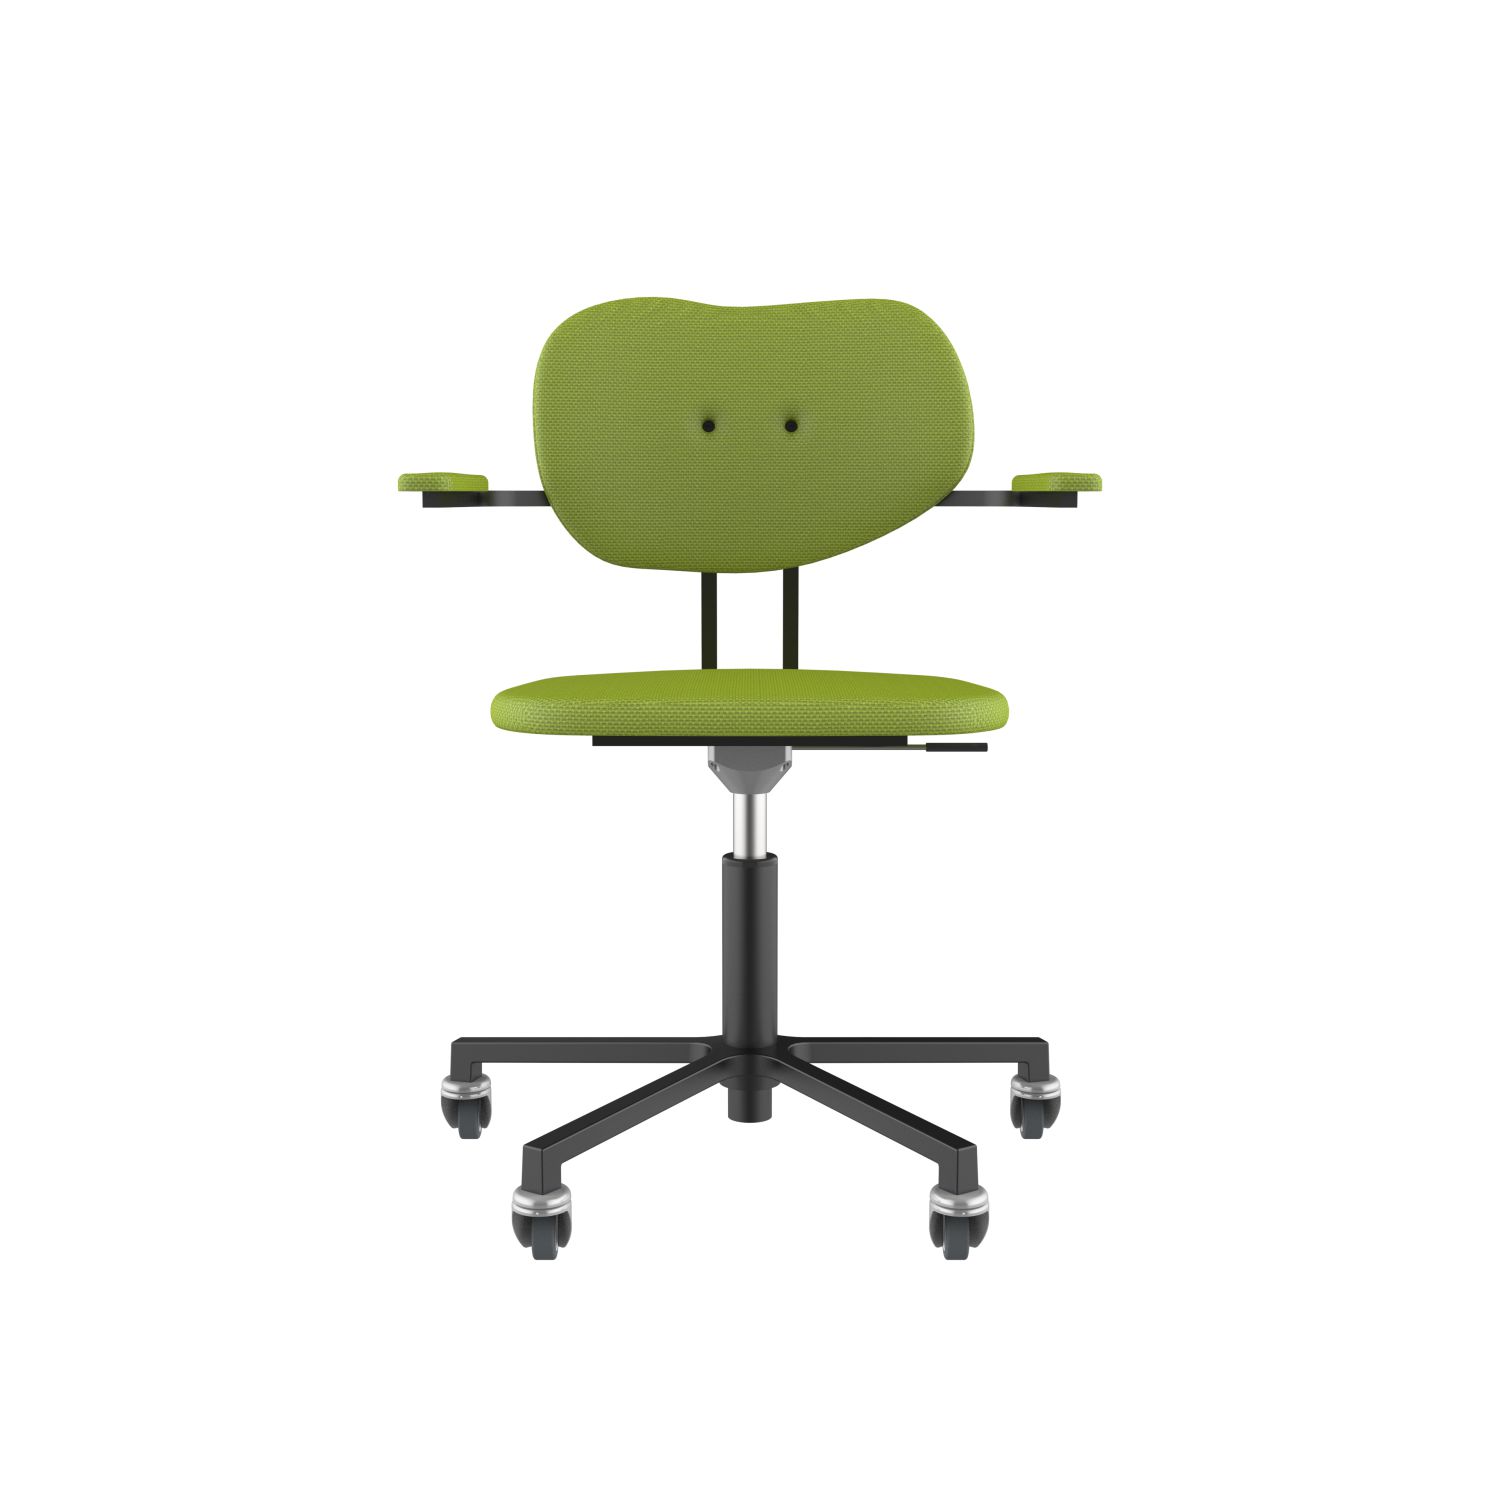 lensvelt maarten baas office chair with armrests backrest b fairway green 020 black ral9005 soft wheels